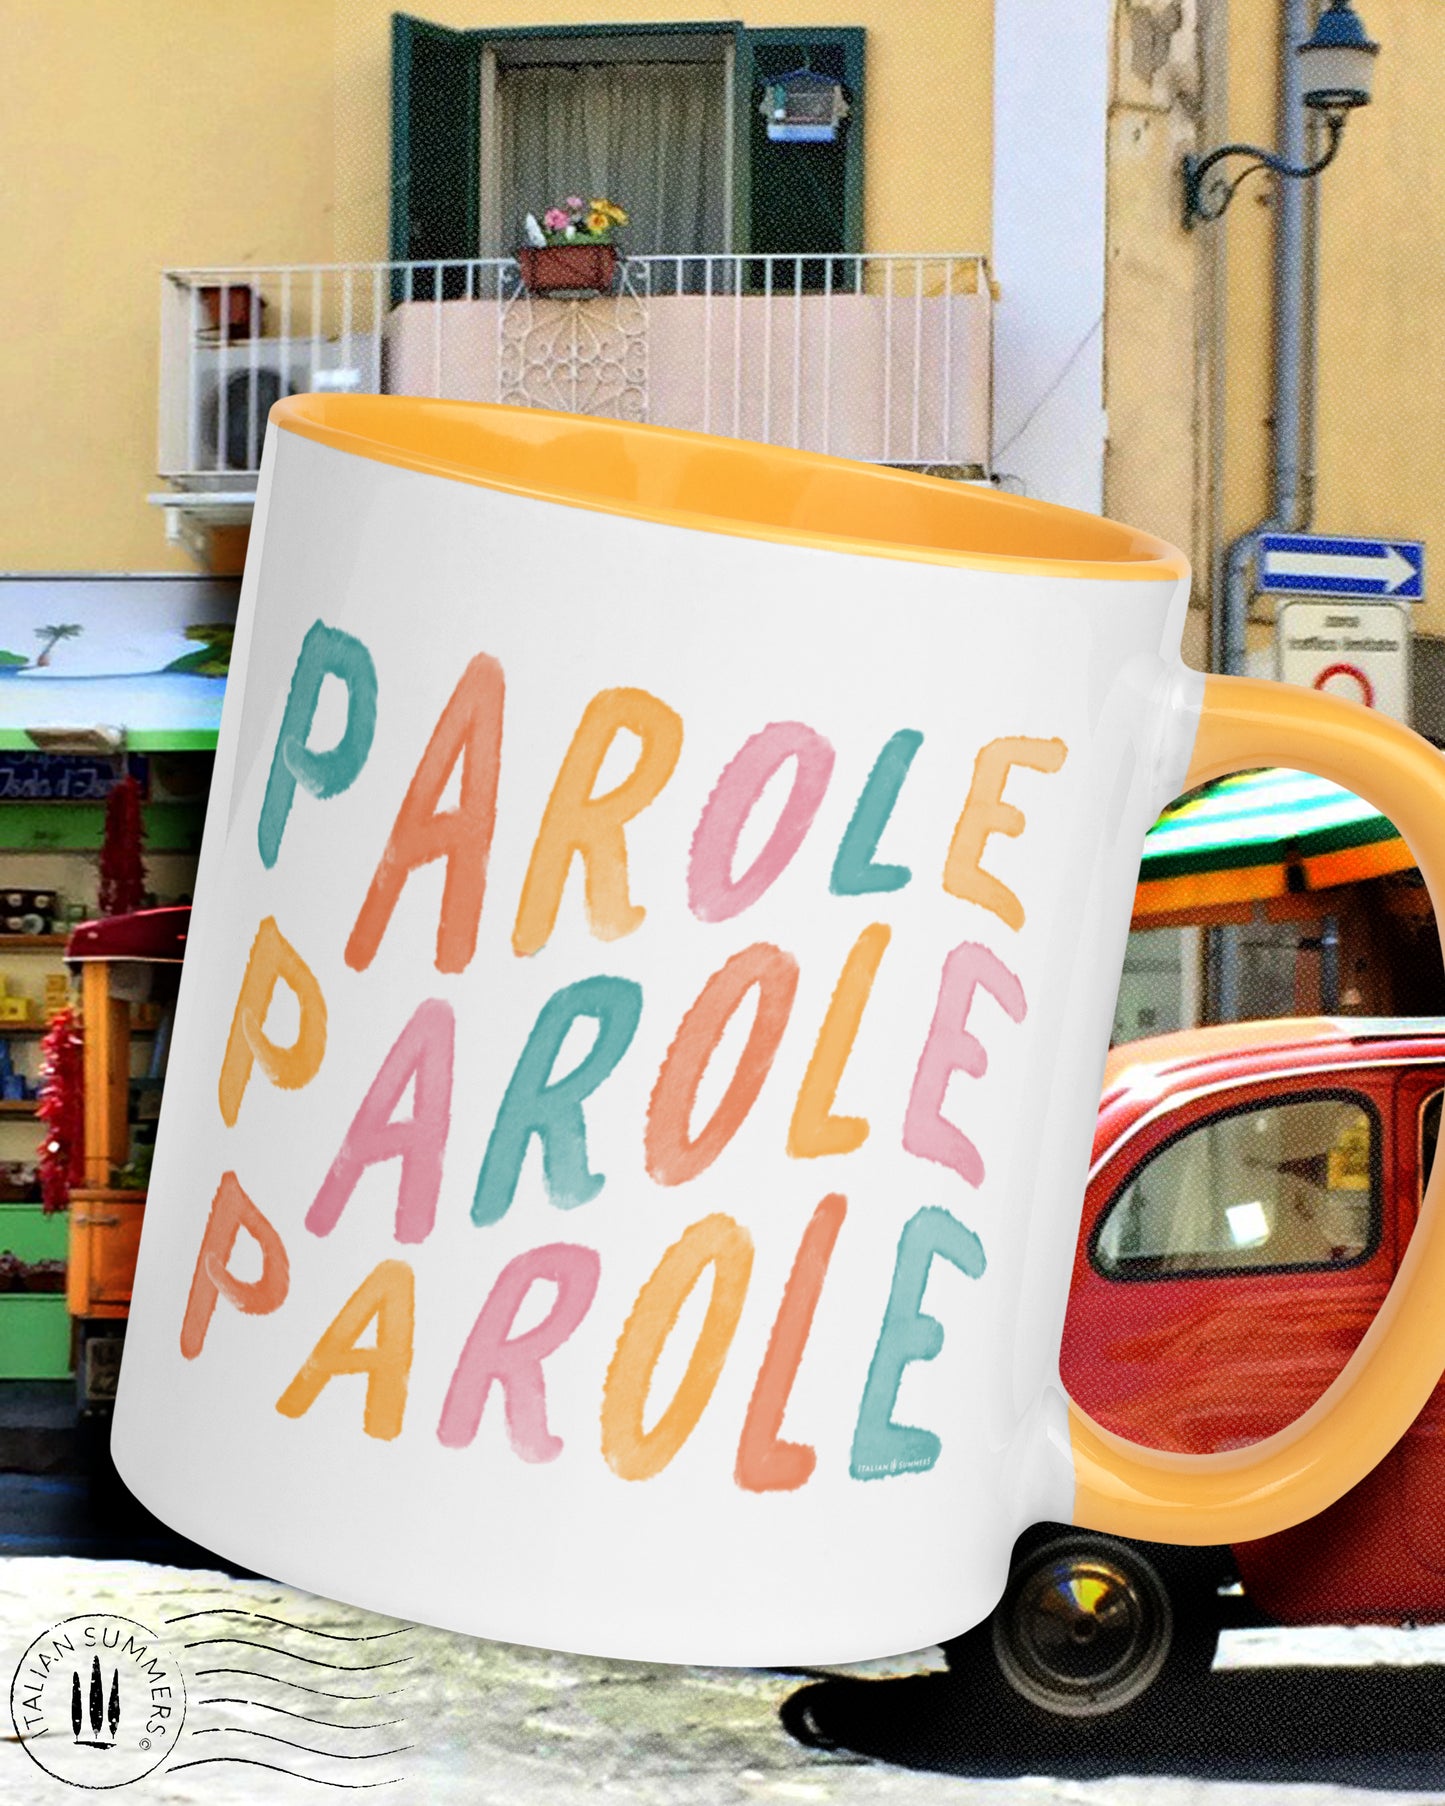 Italy inspired mug Parole, Parole, Parole by Italian Summers